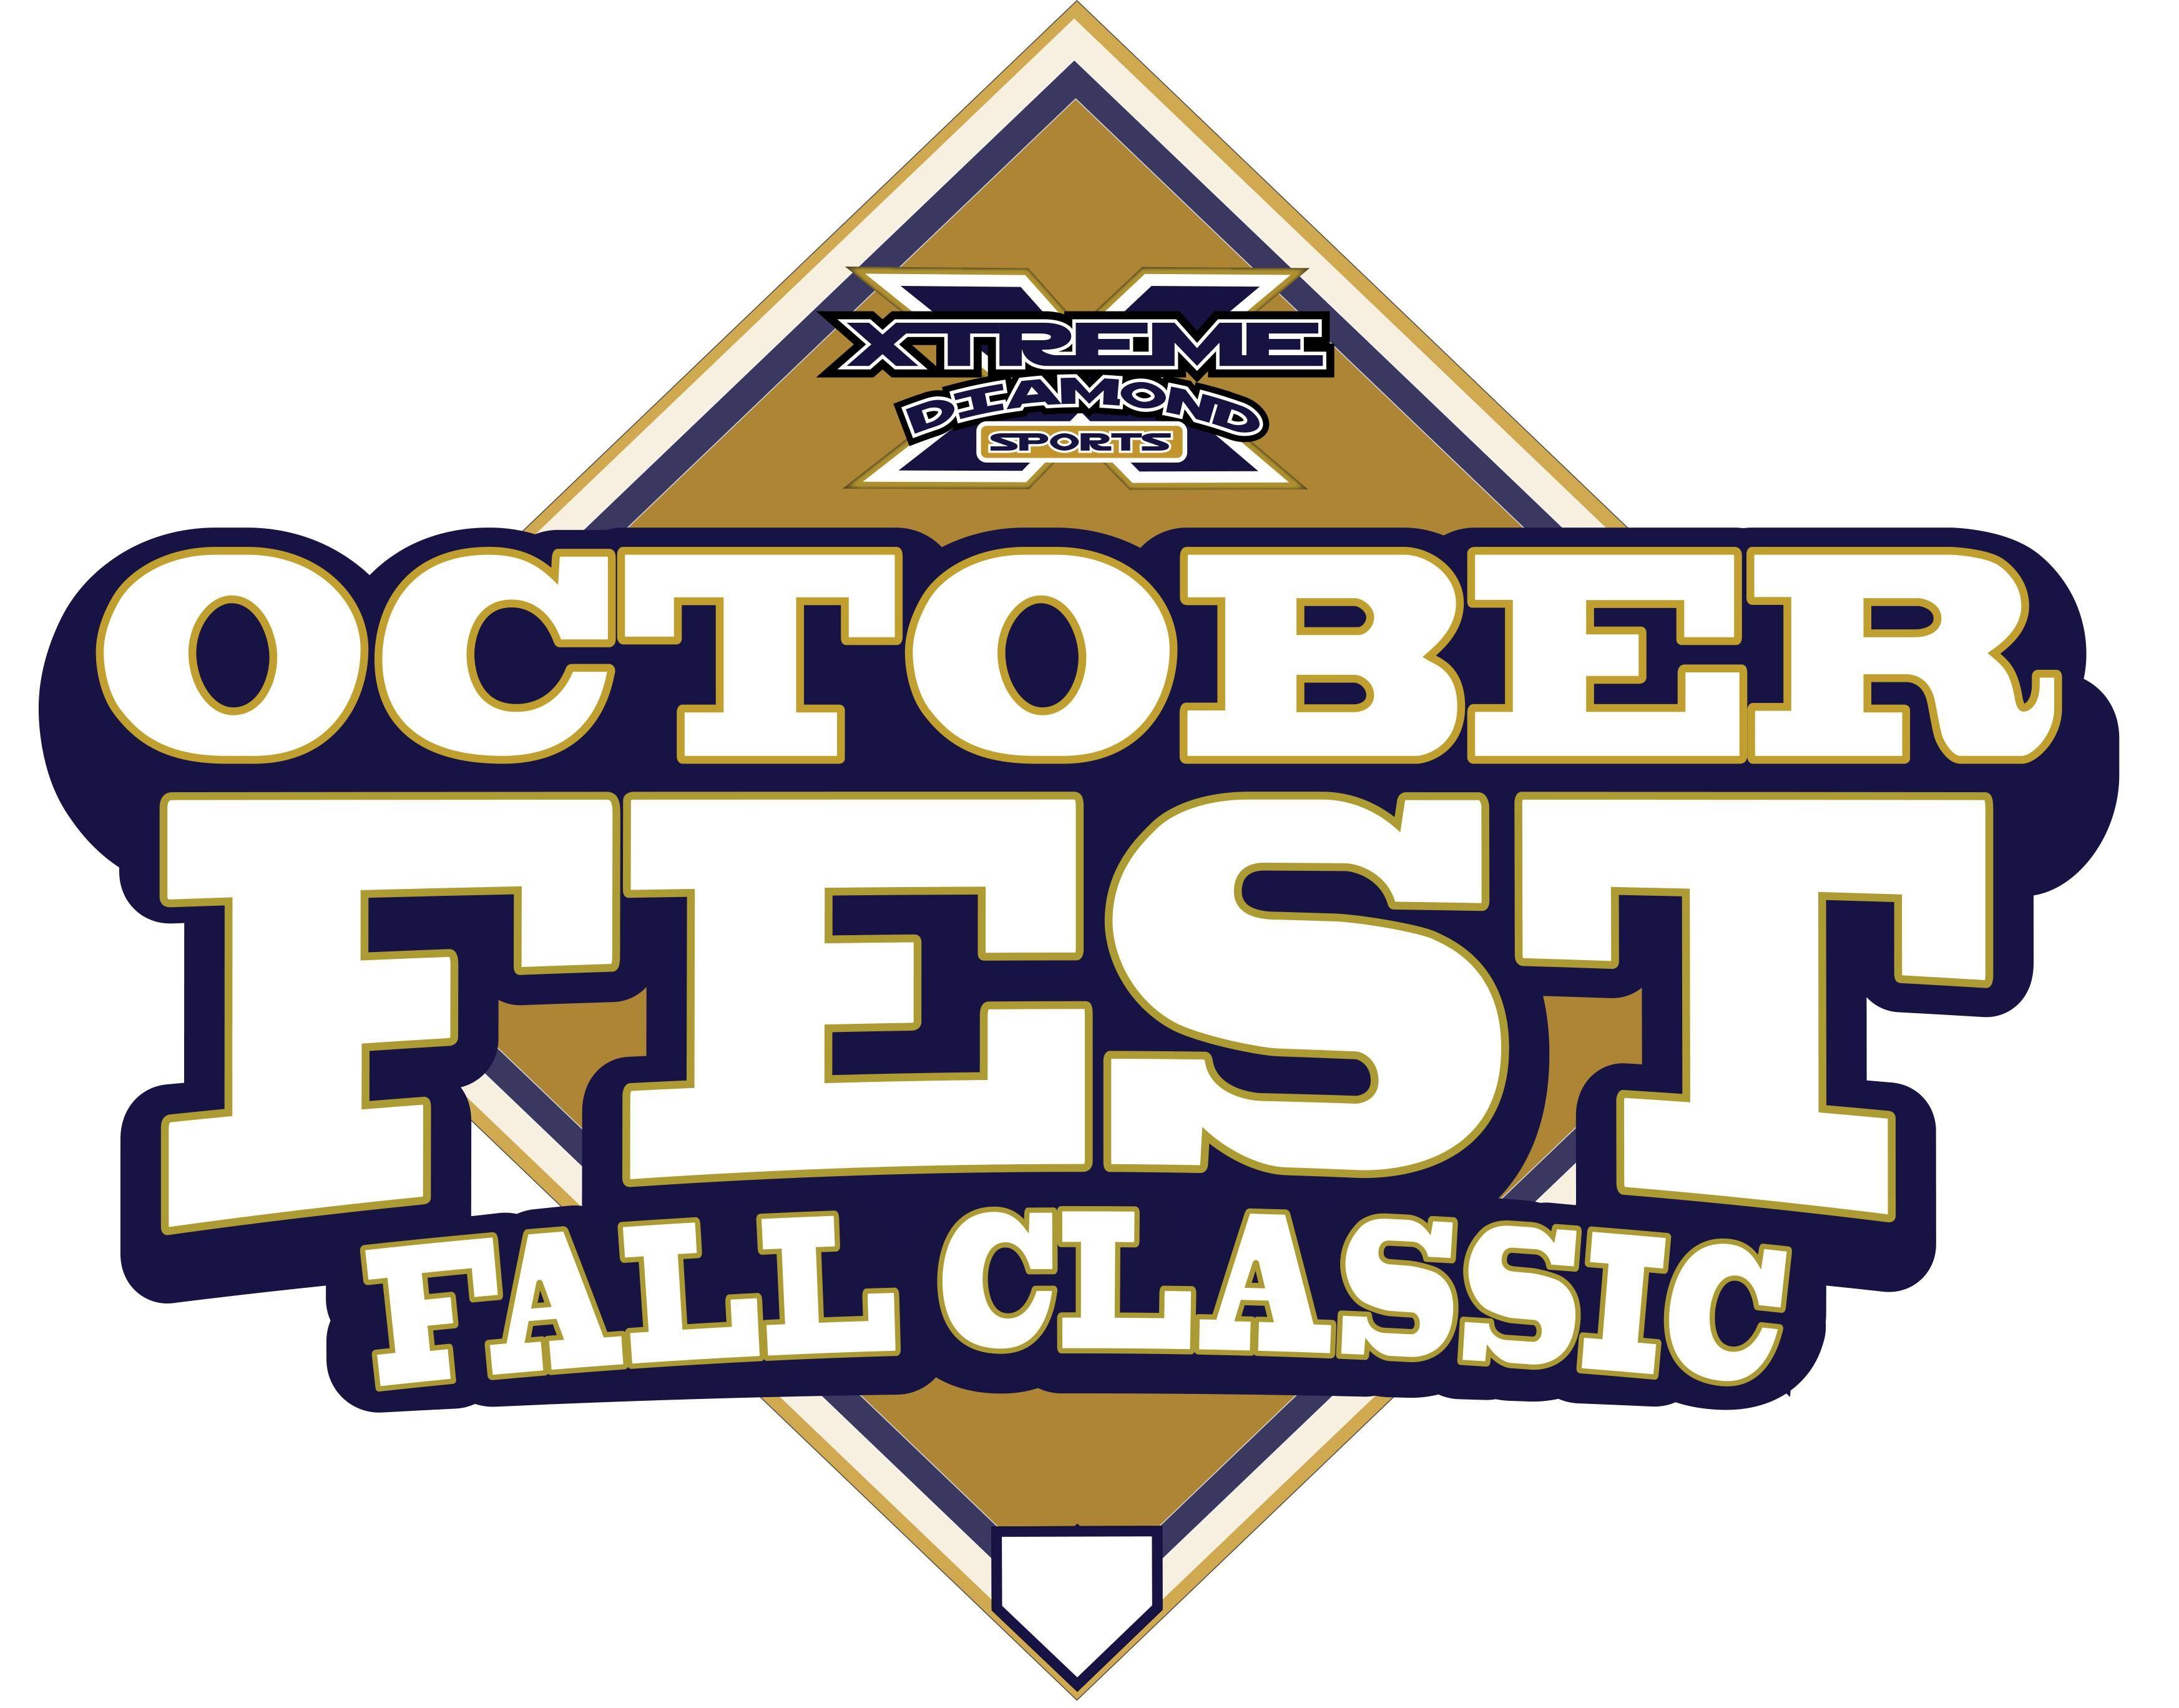 Spots Triangles Baseball Logo - So Cal Baseball October 13 - 2018 Octoberfest Fall Classic